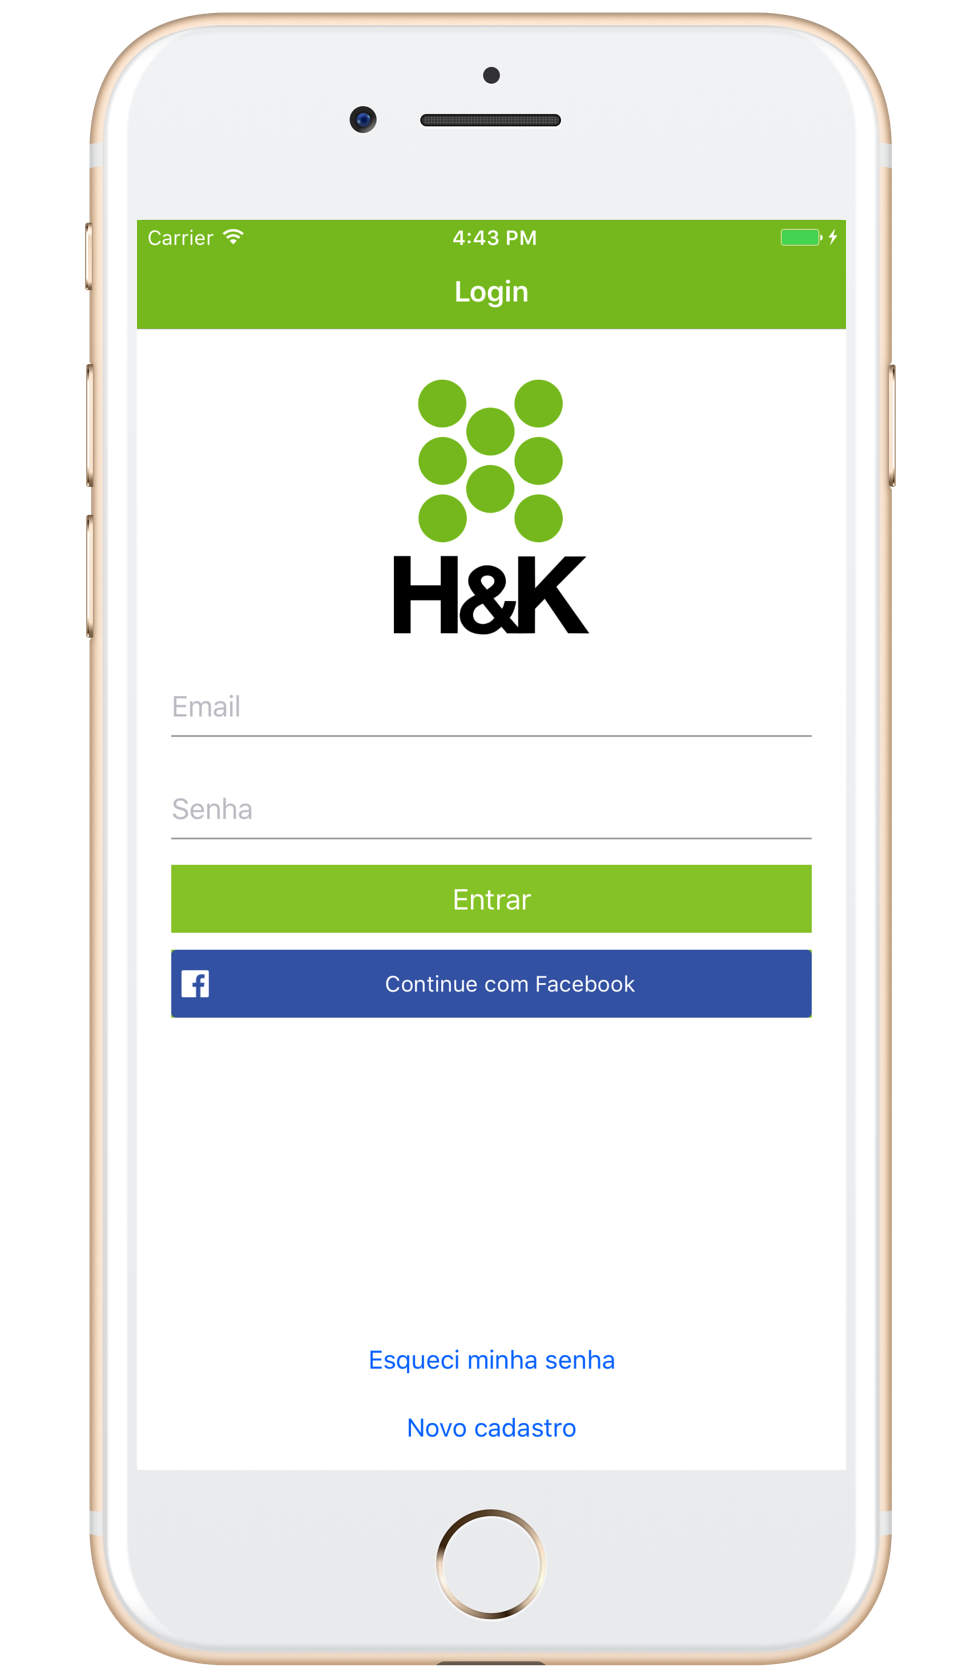 iOS version of the H&K app